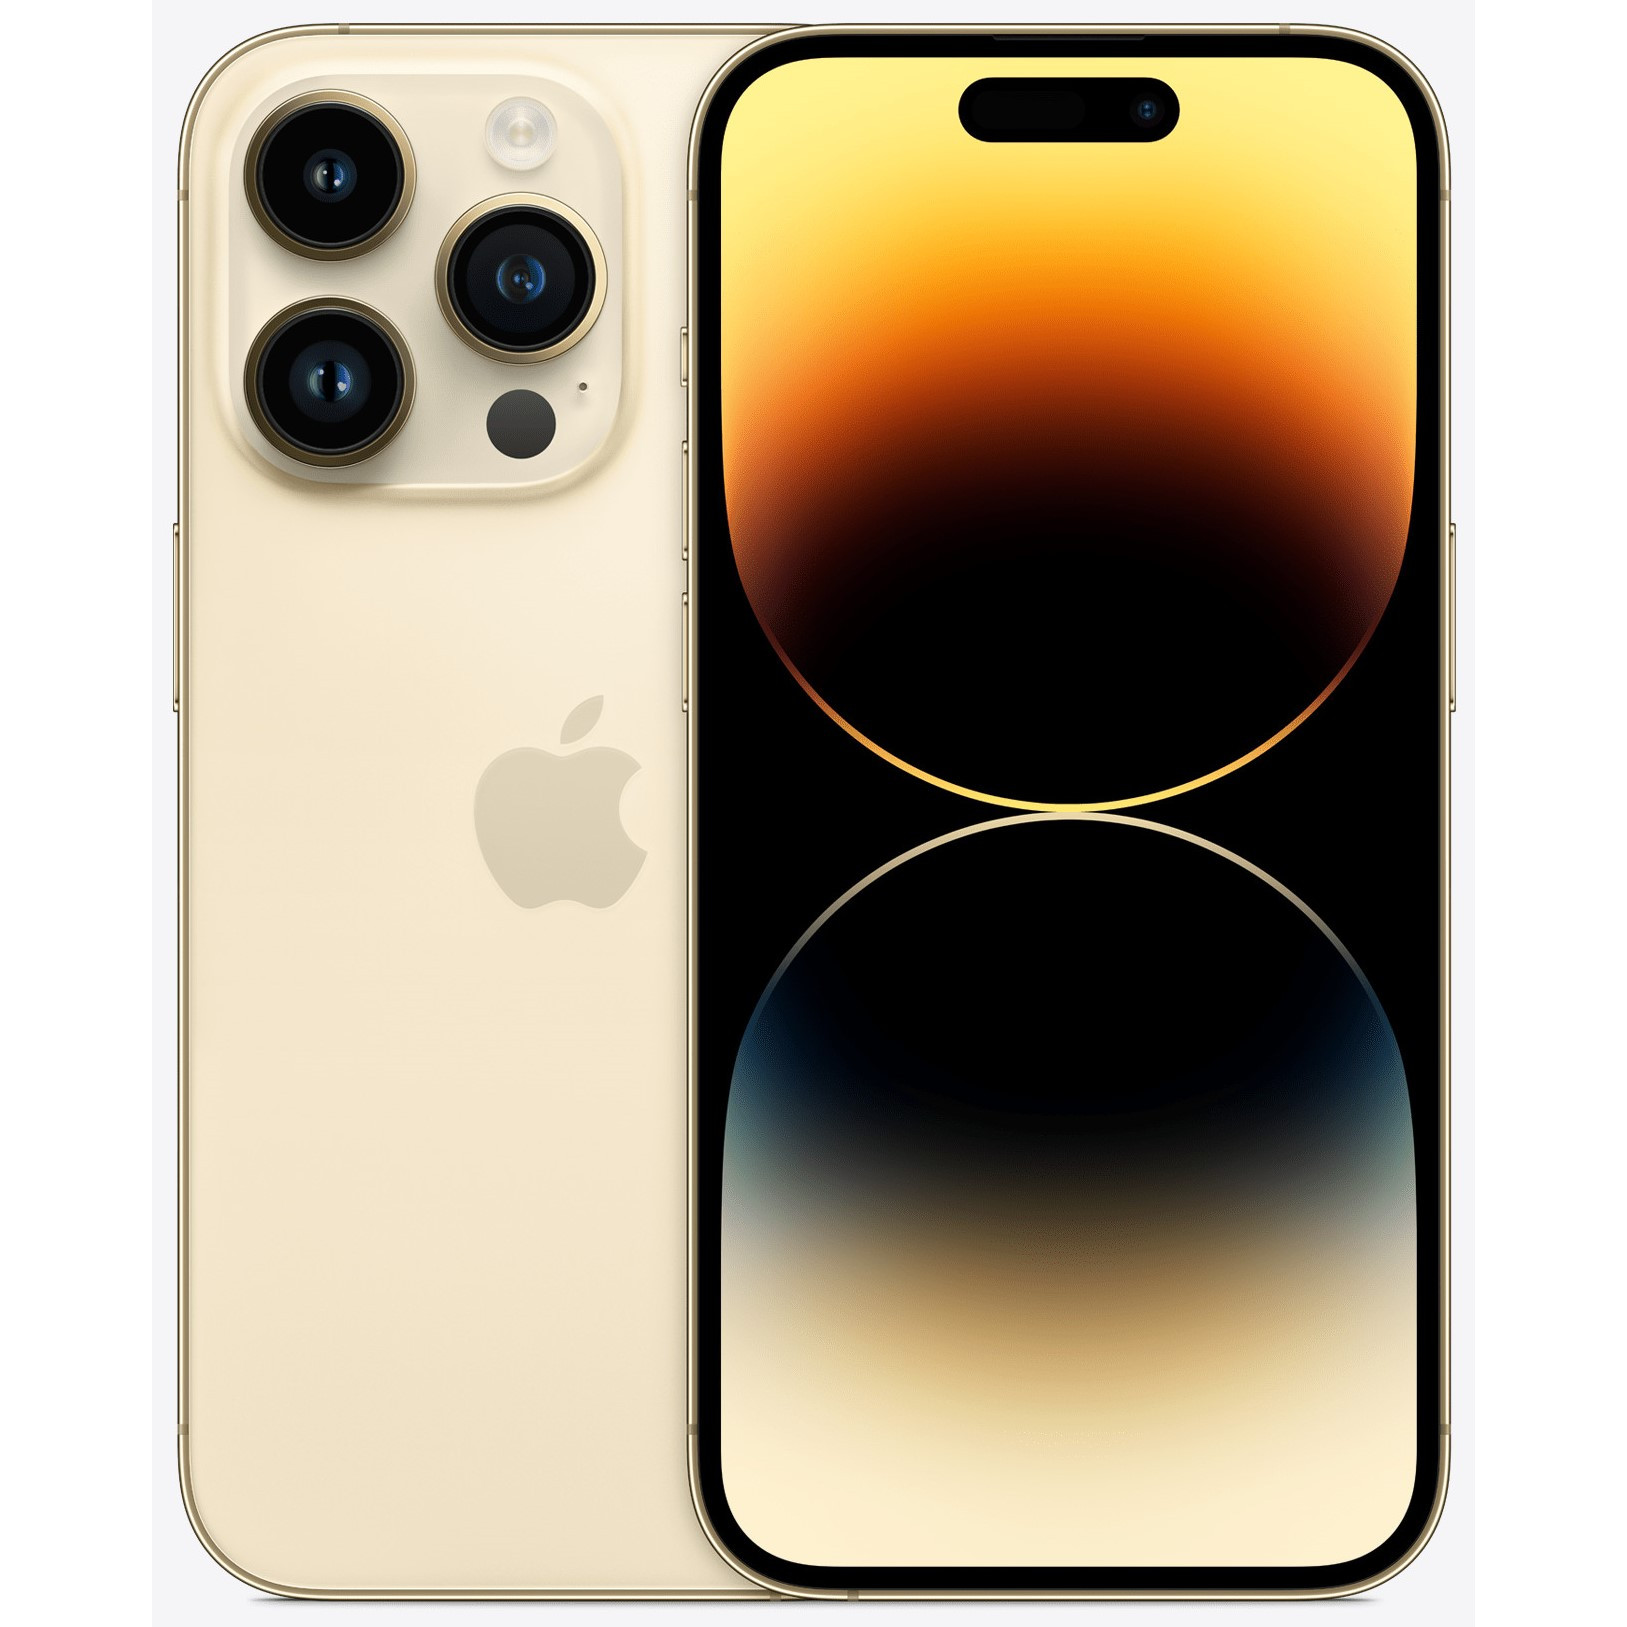 Apple iPhone 14 Pro 256GB Dual SIM Gold (MQ143) - зображення 1